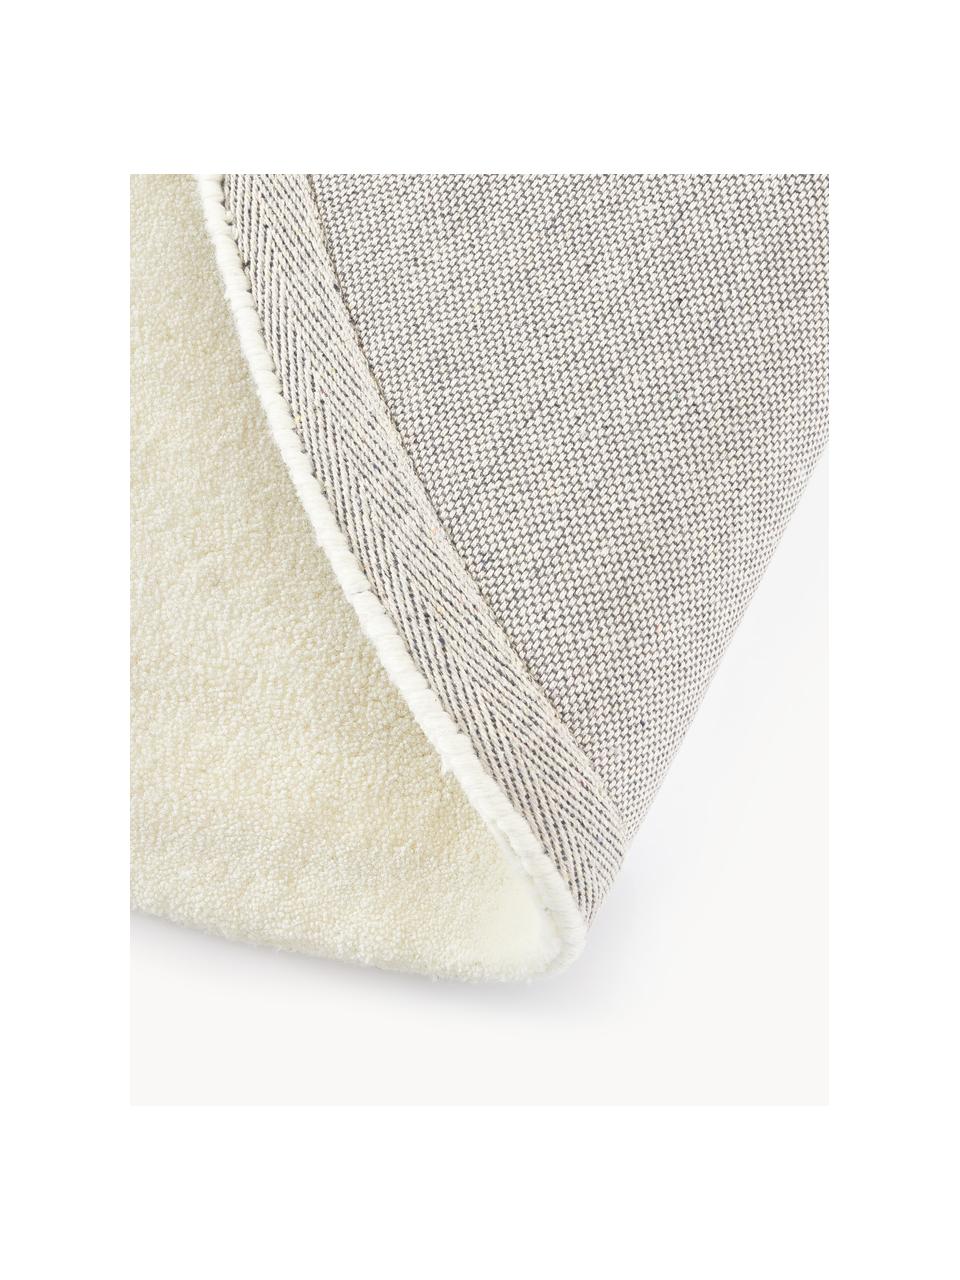 Alfombra redonda artesanal de lana Ezra, Parte superior: 100% lana con certificado, Reverso: 70% algodón, 30% poliéste, Blanco crema, Ø 150 cm (Tamaño M)